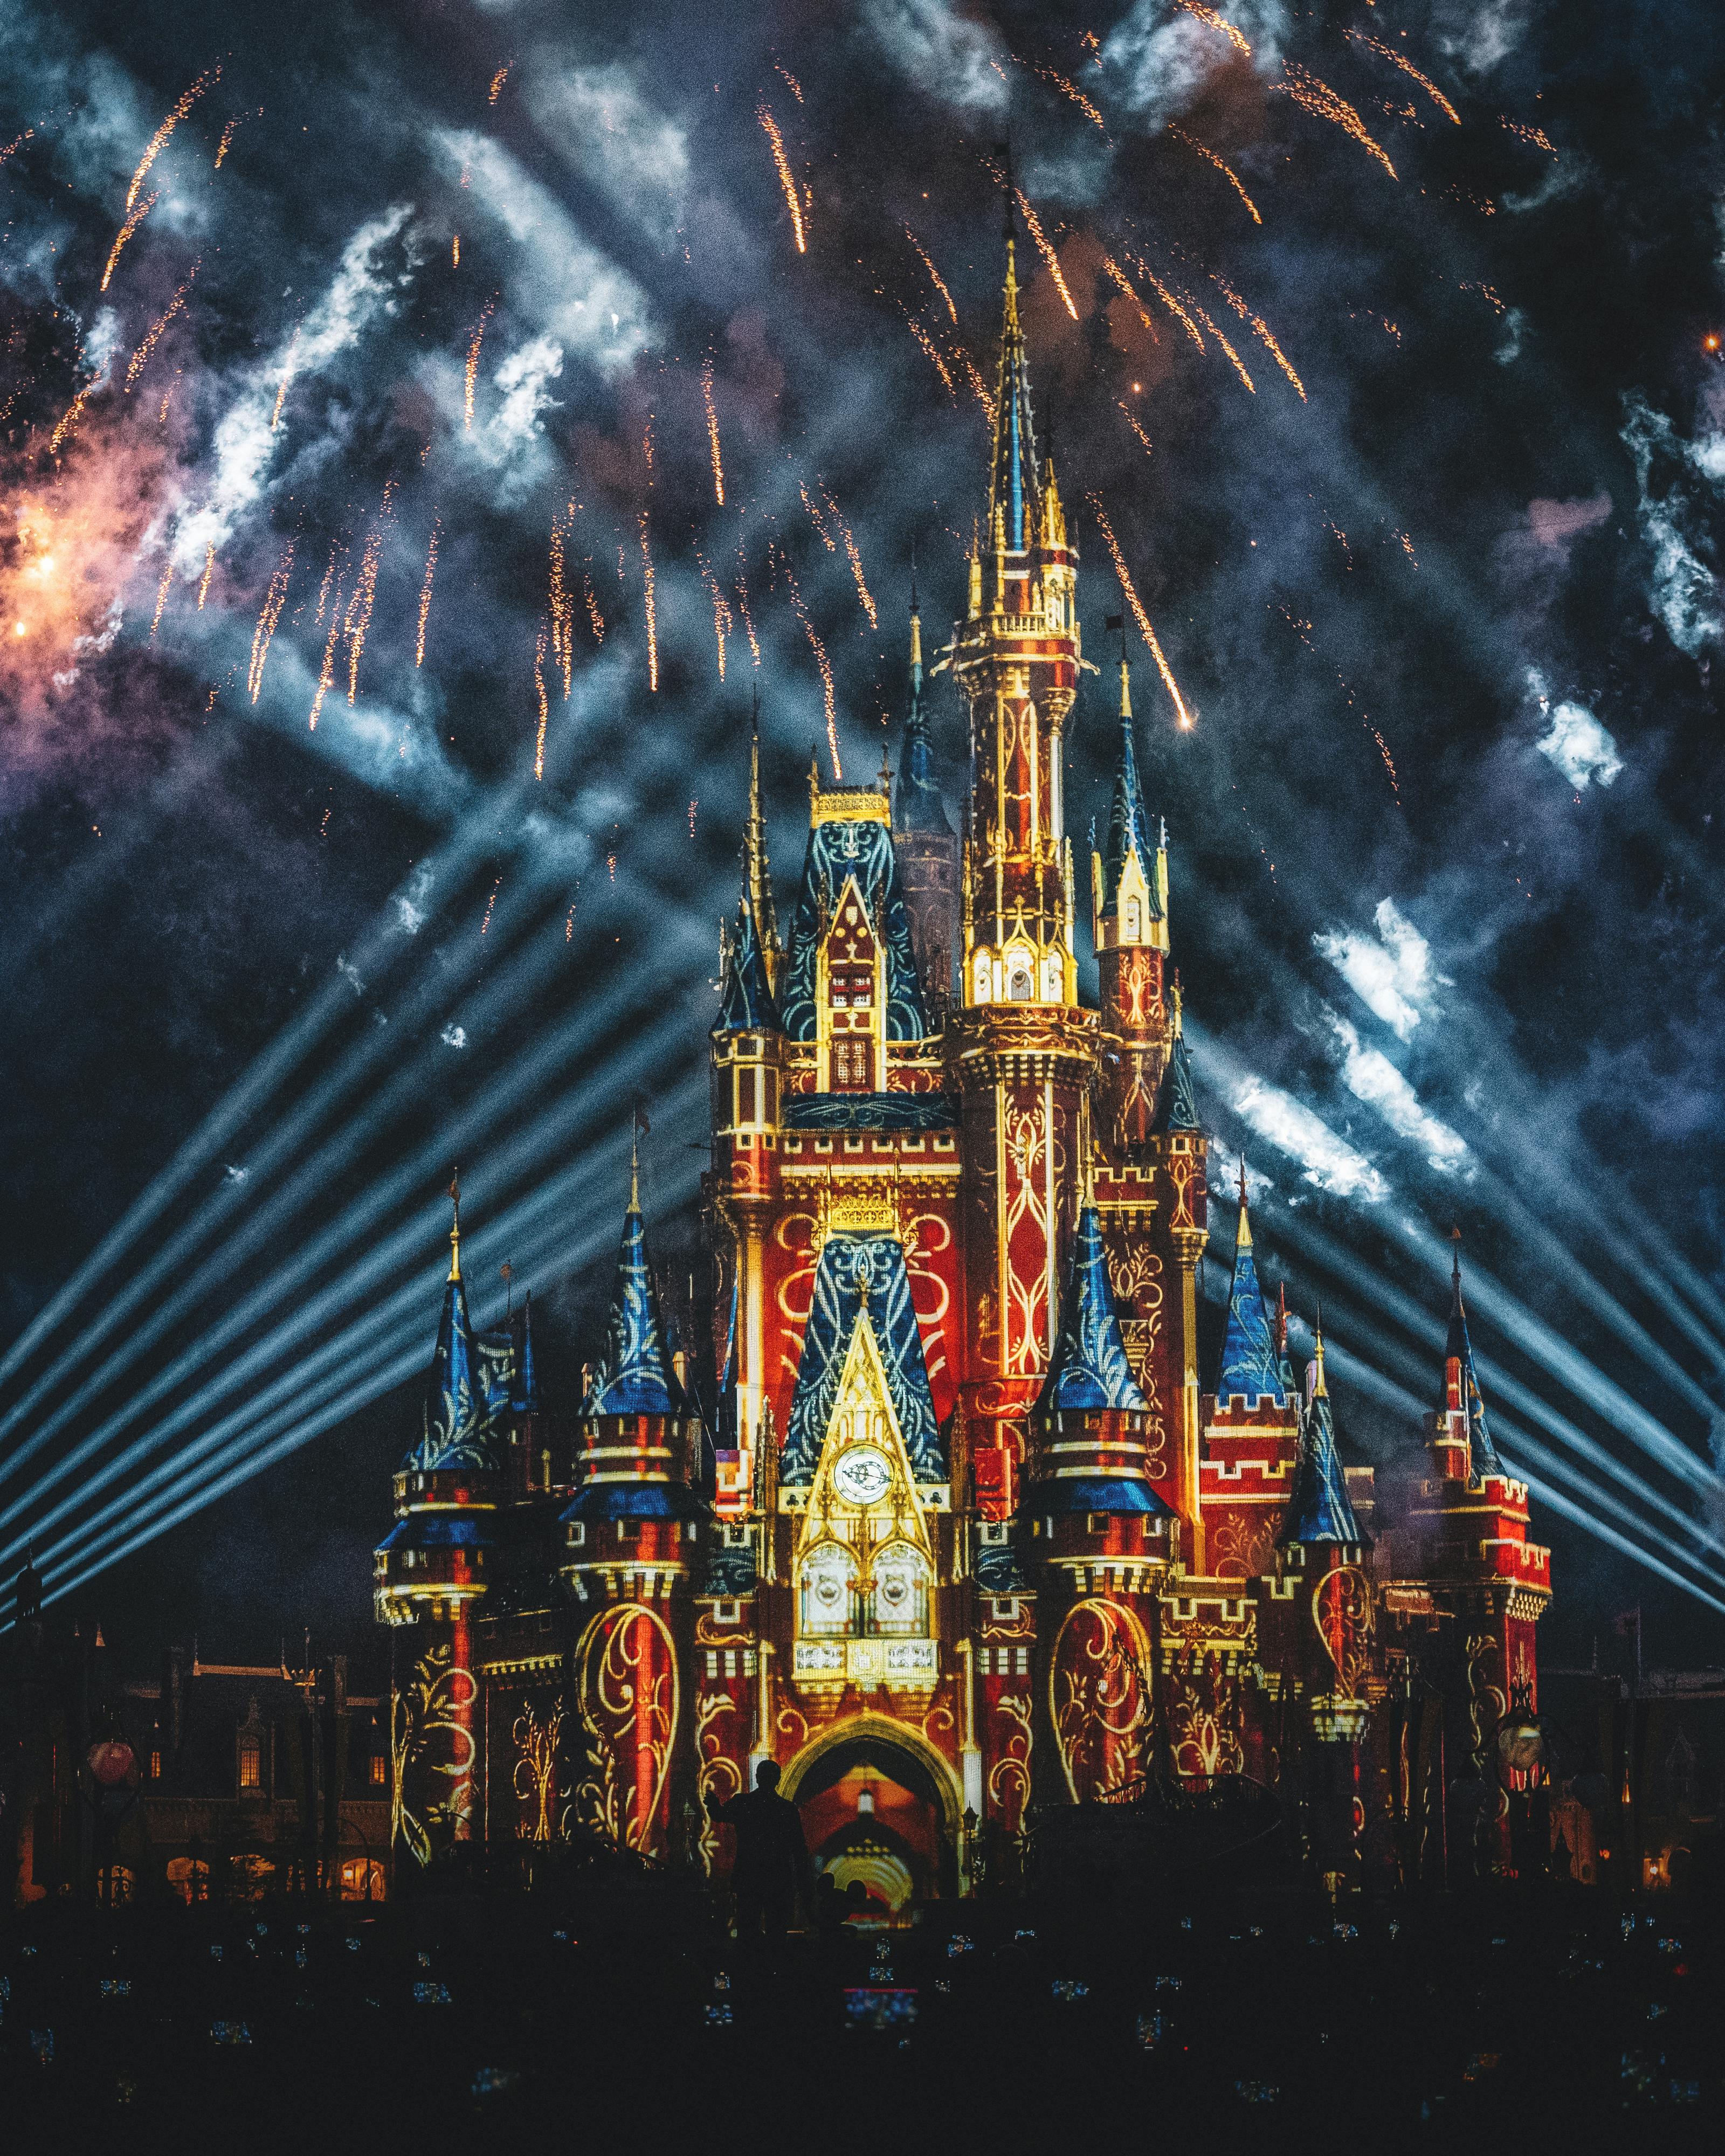 Disney Castle Pictures  Download Free Images  Stock Photos on Unsplash